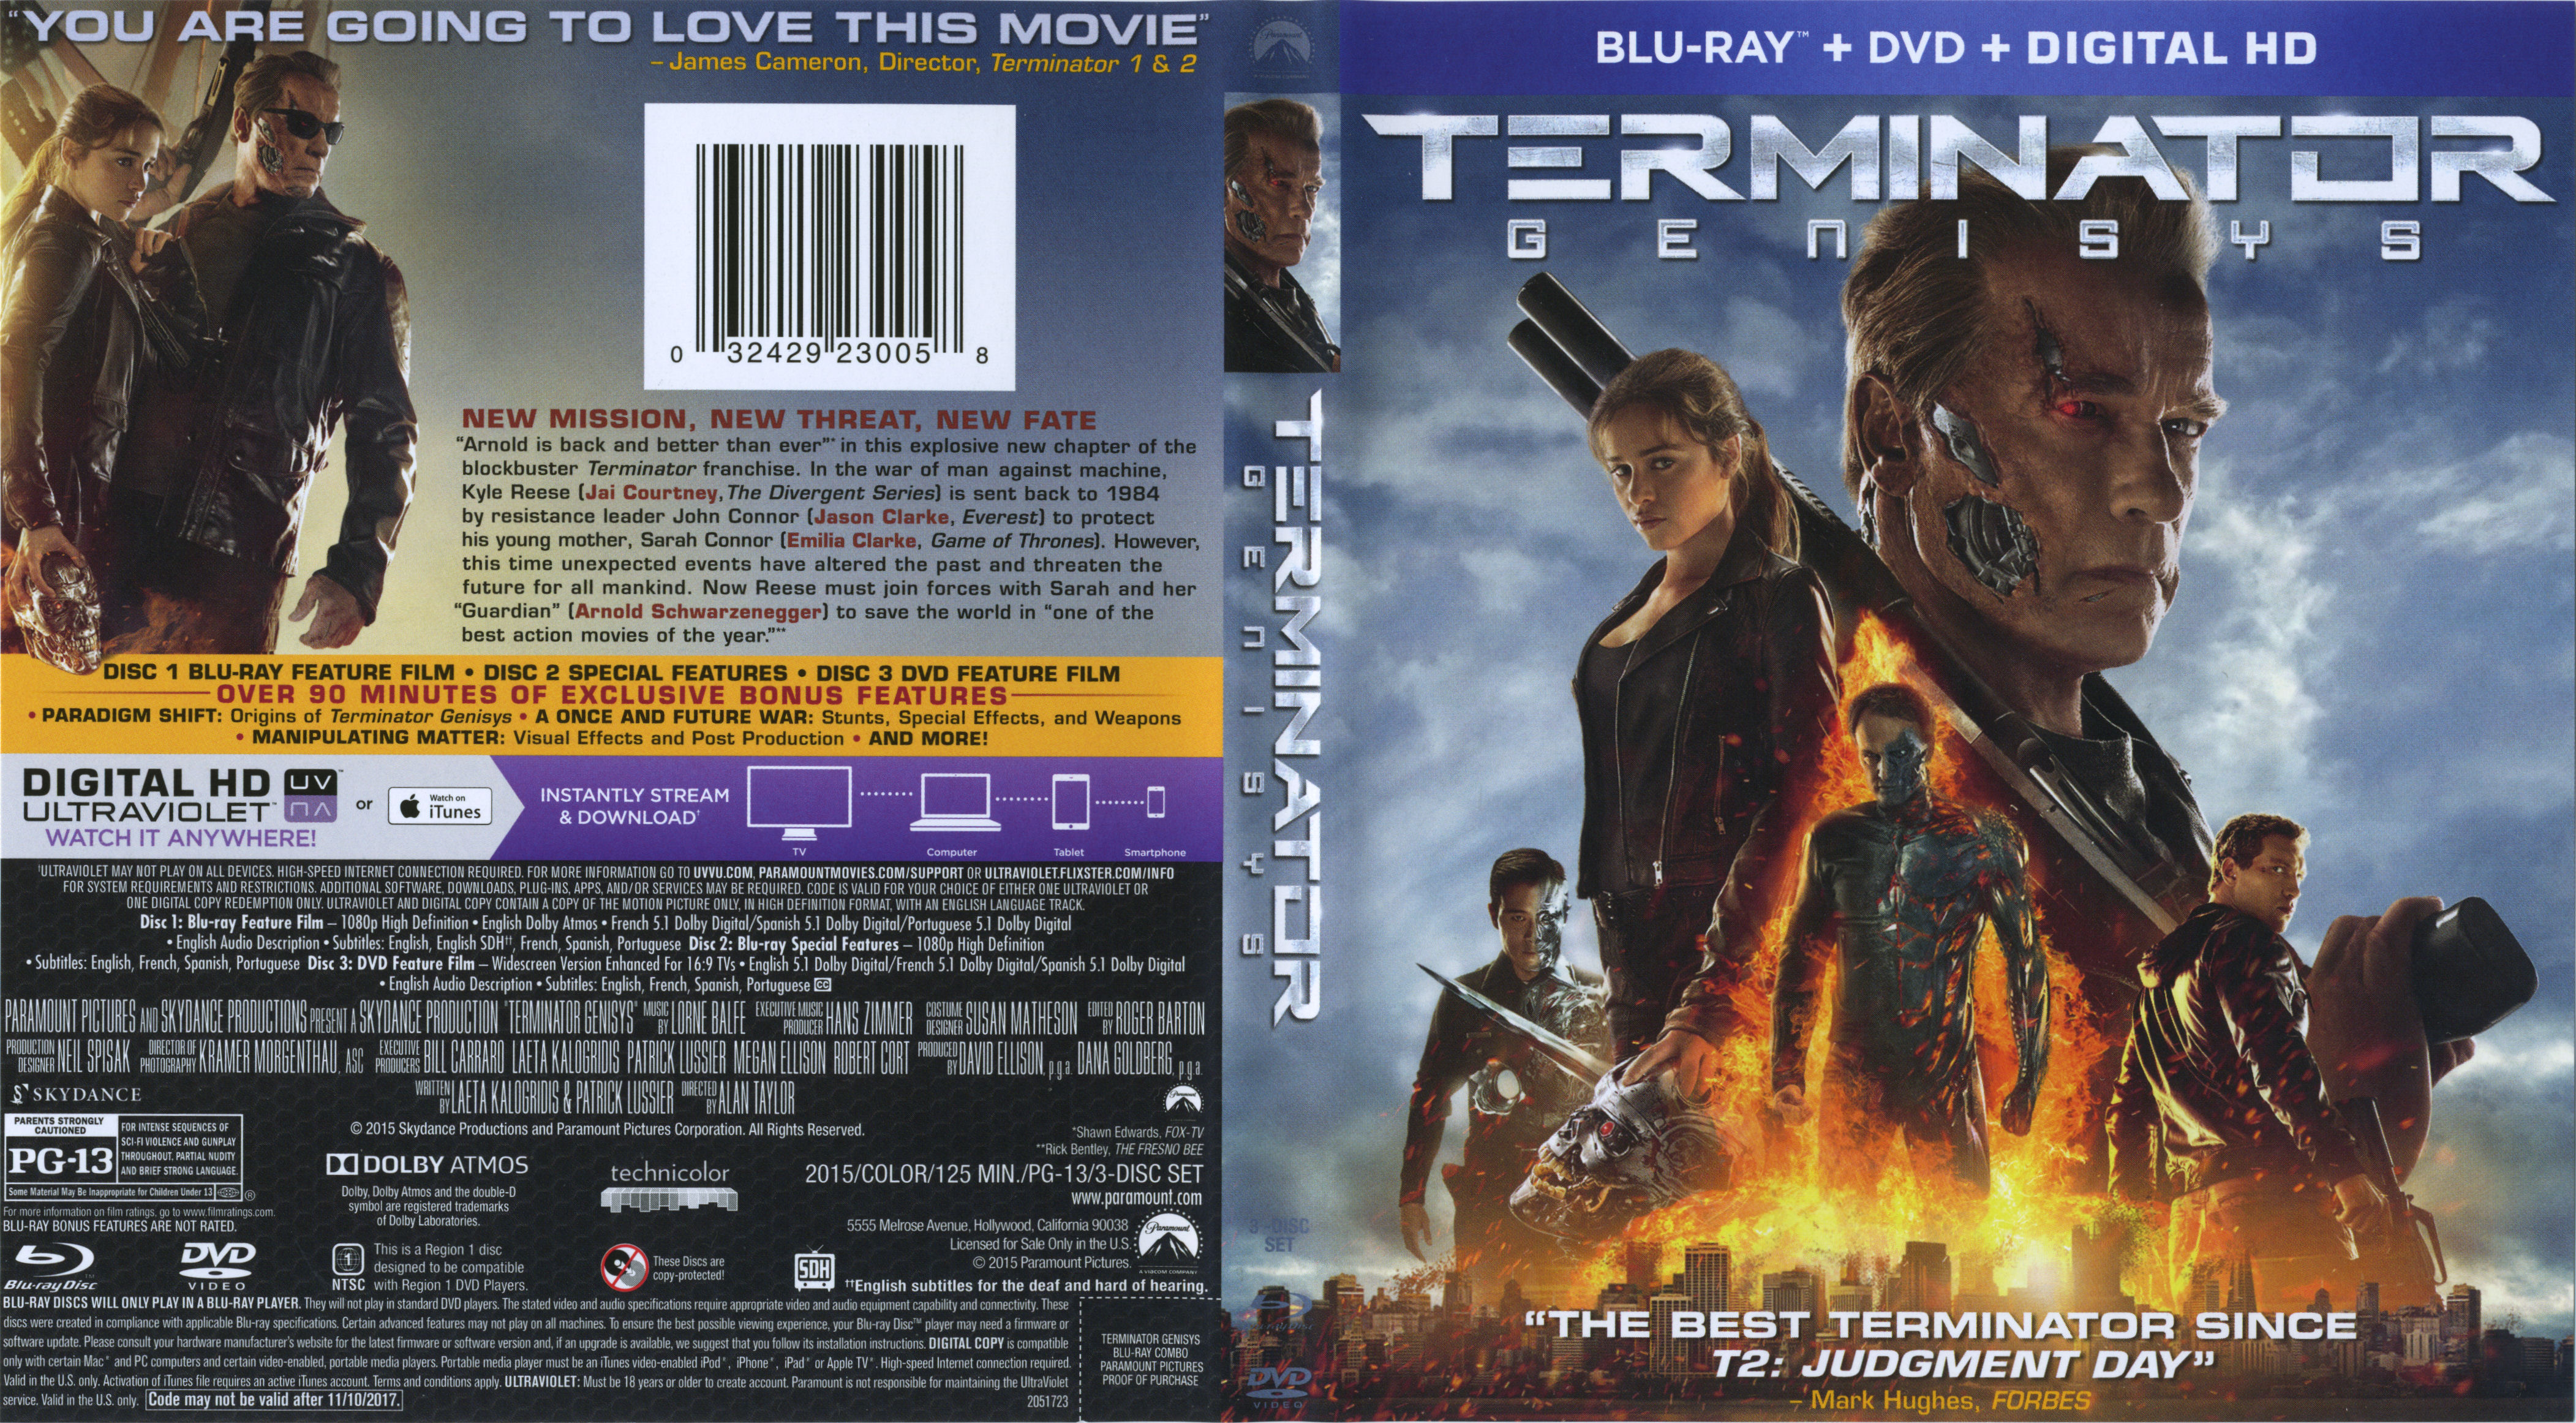 Jaquette DVD Terminator Genisys Zone 1 (BLU-RAY)